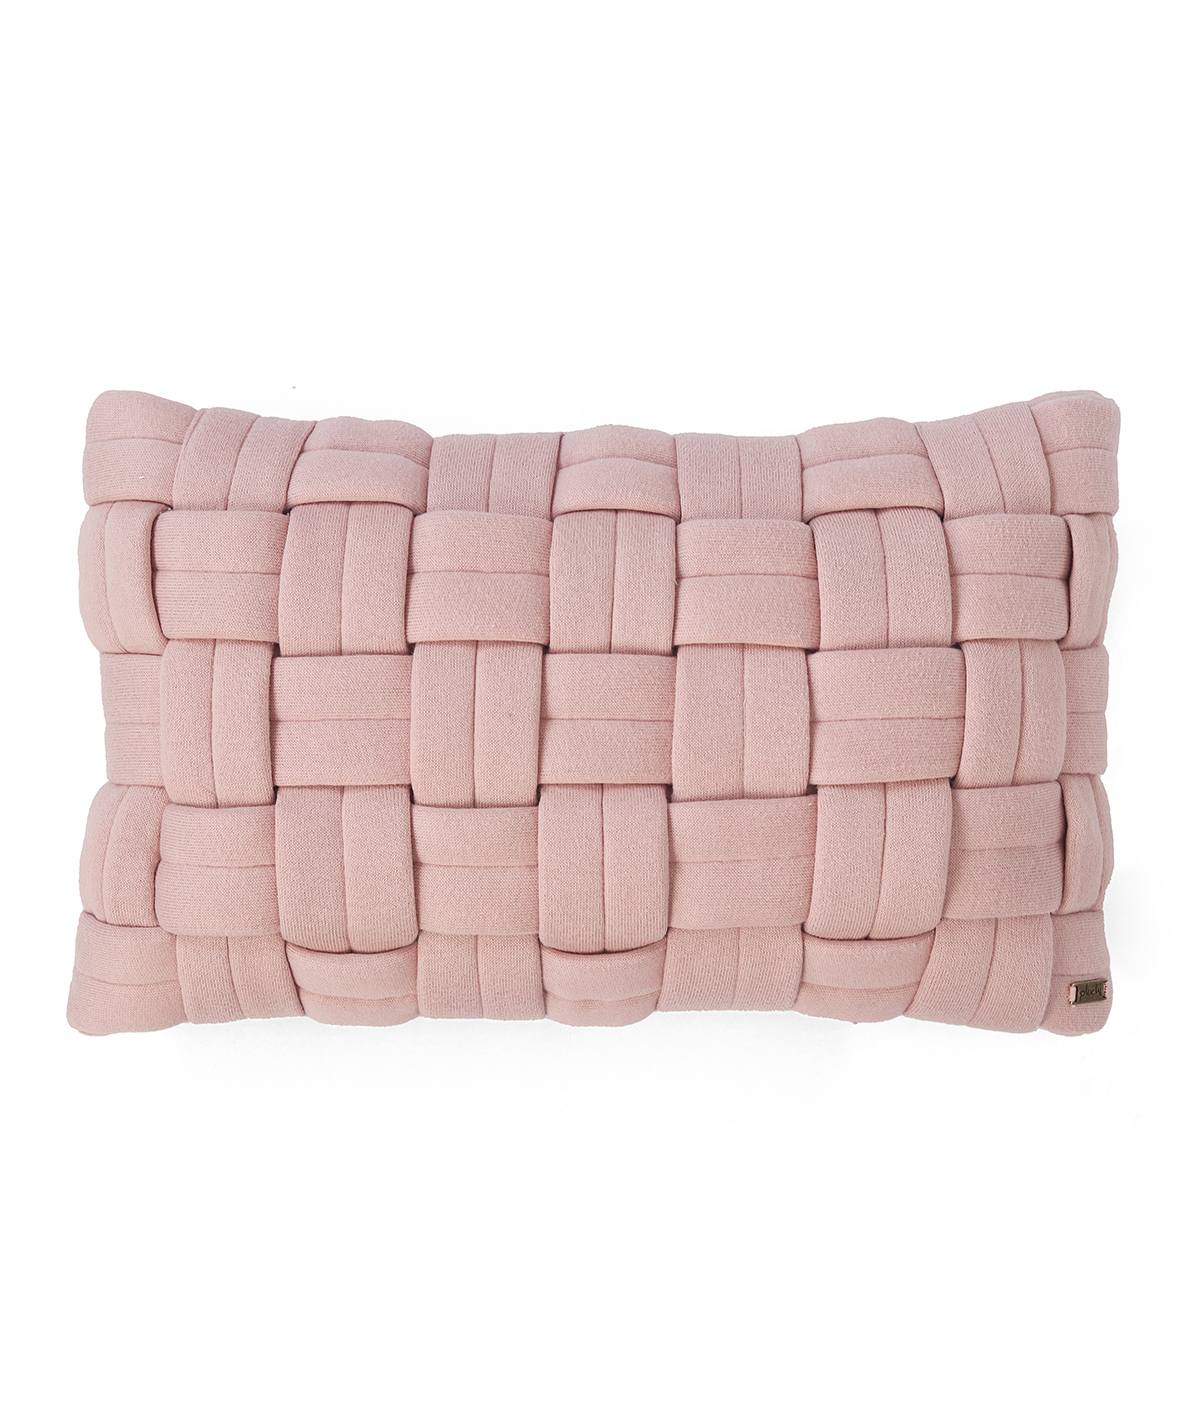 buy cushion covers